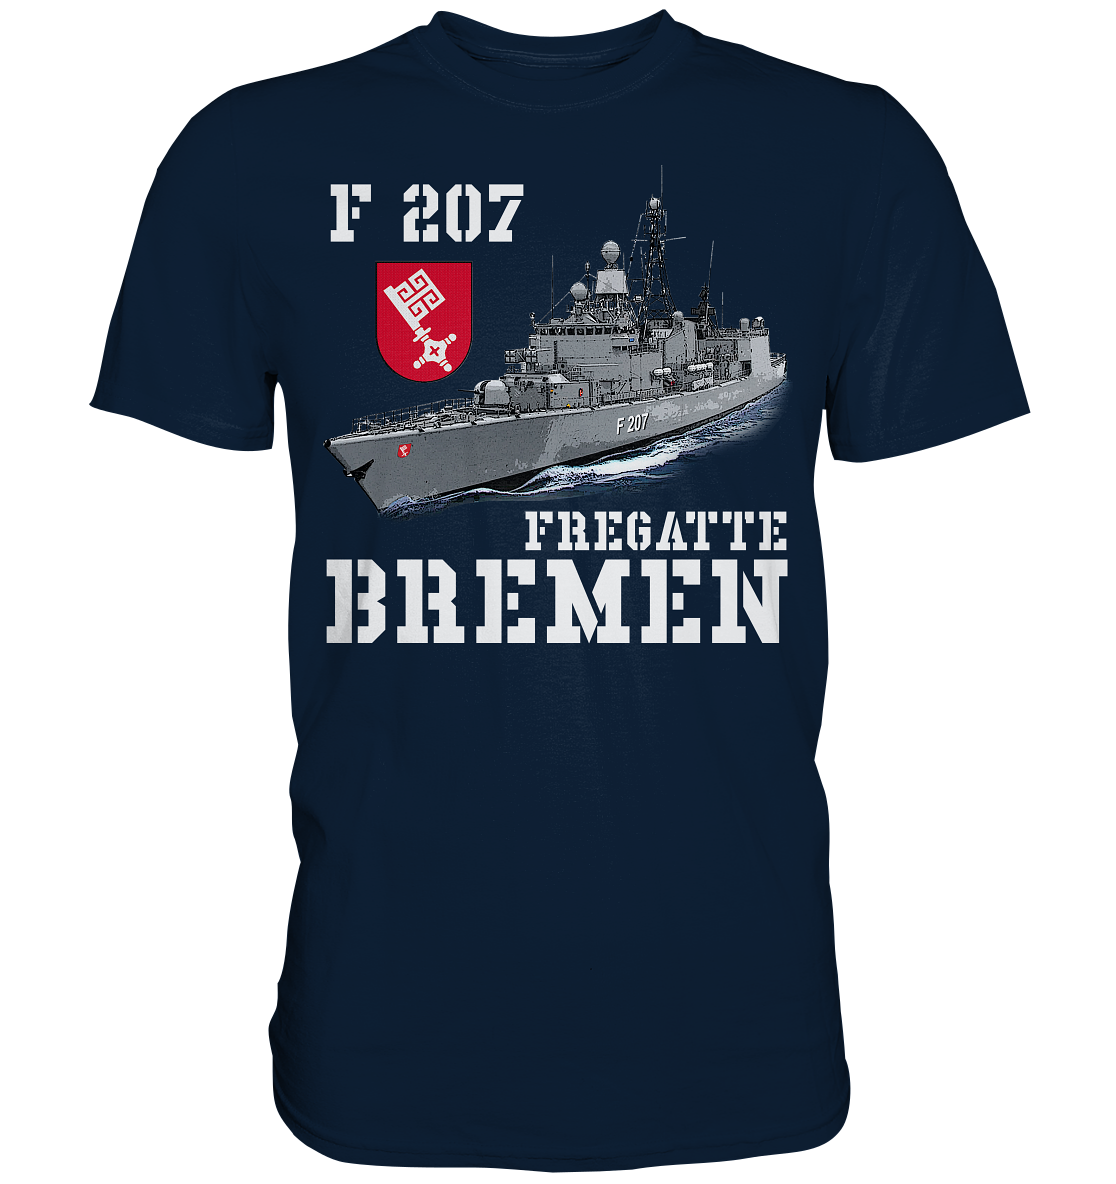 F207 Fregatte BREMEN - Premium Shirt